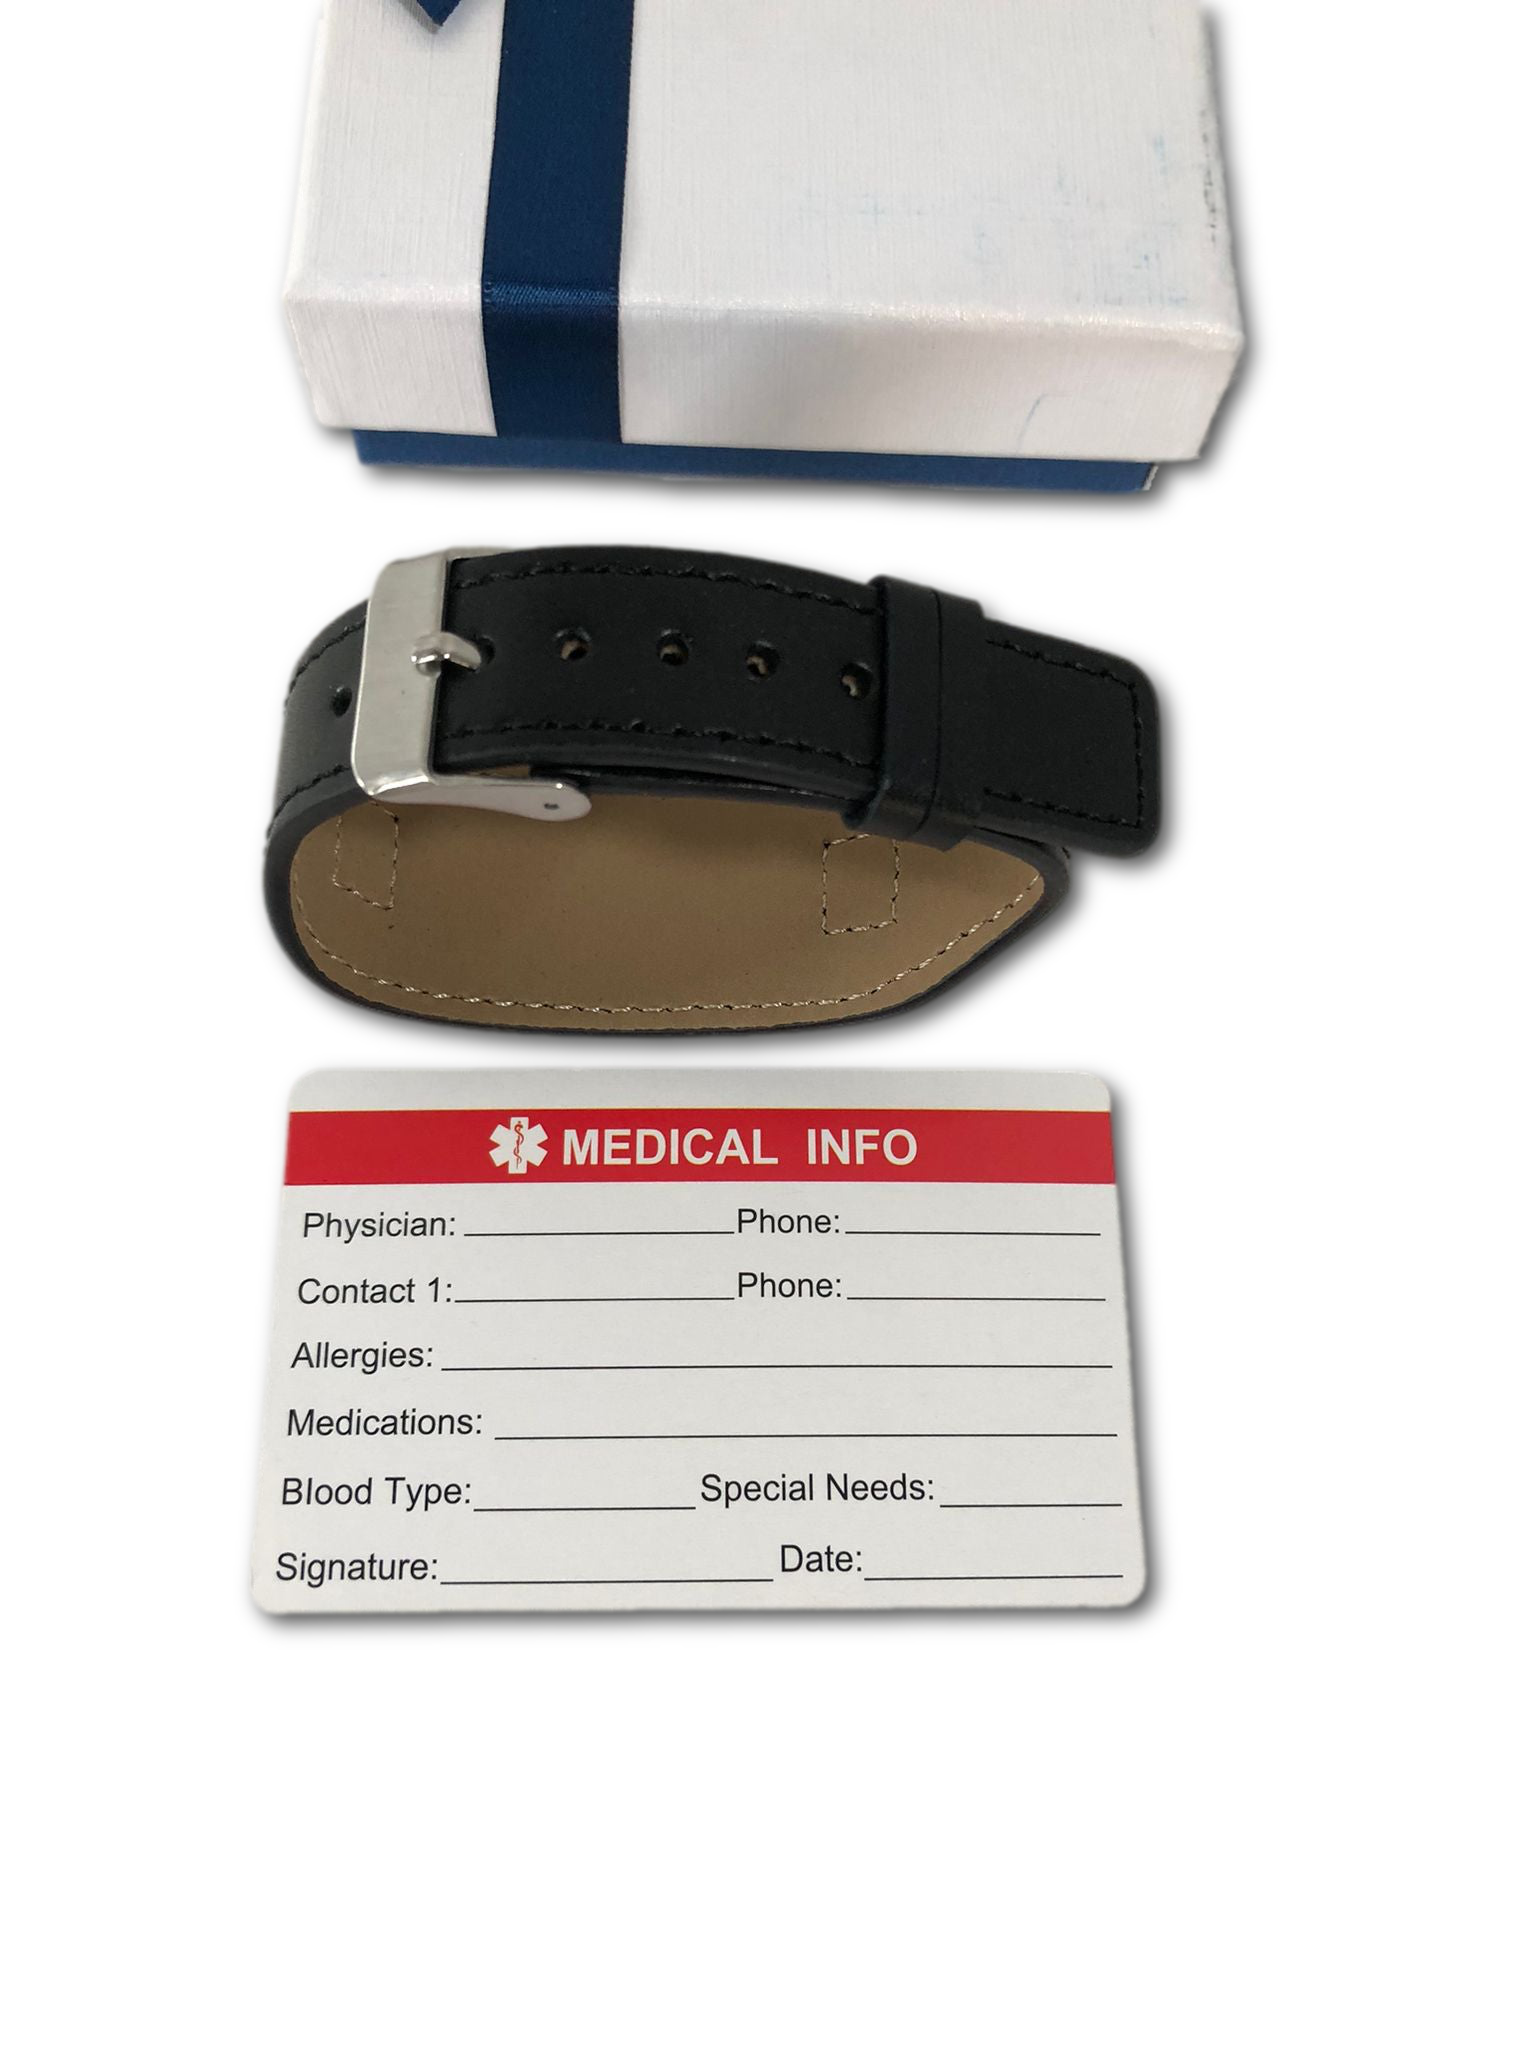 MPRAINBOW Custom Personalized Medical Alert ID Wide Genuine Leather Stainless Steel Adjustable Bracelet Wristband,6.7"-8.7"